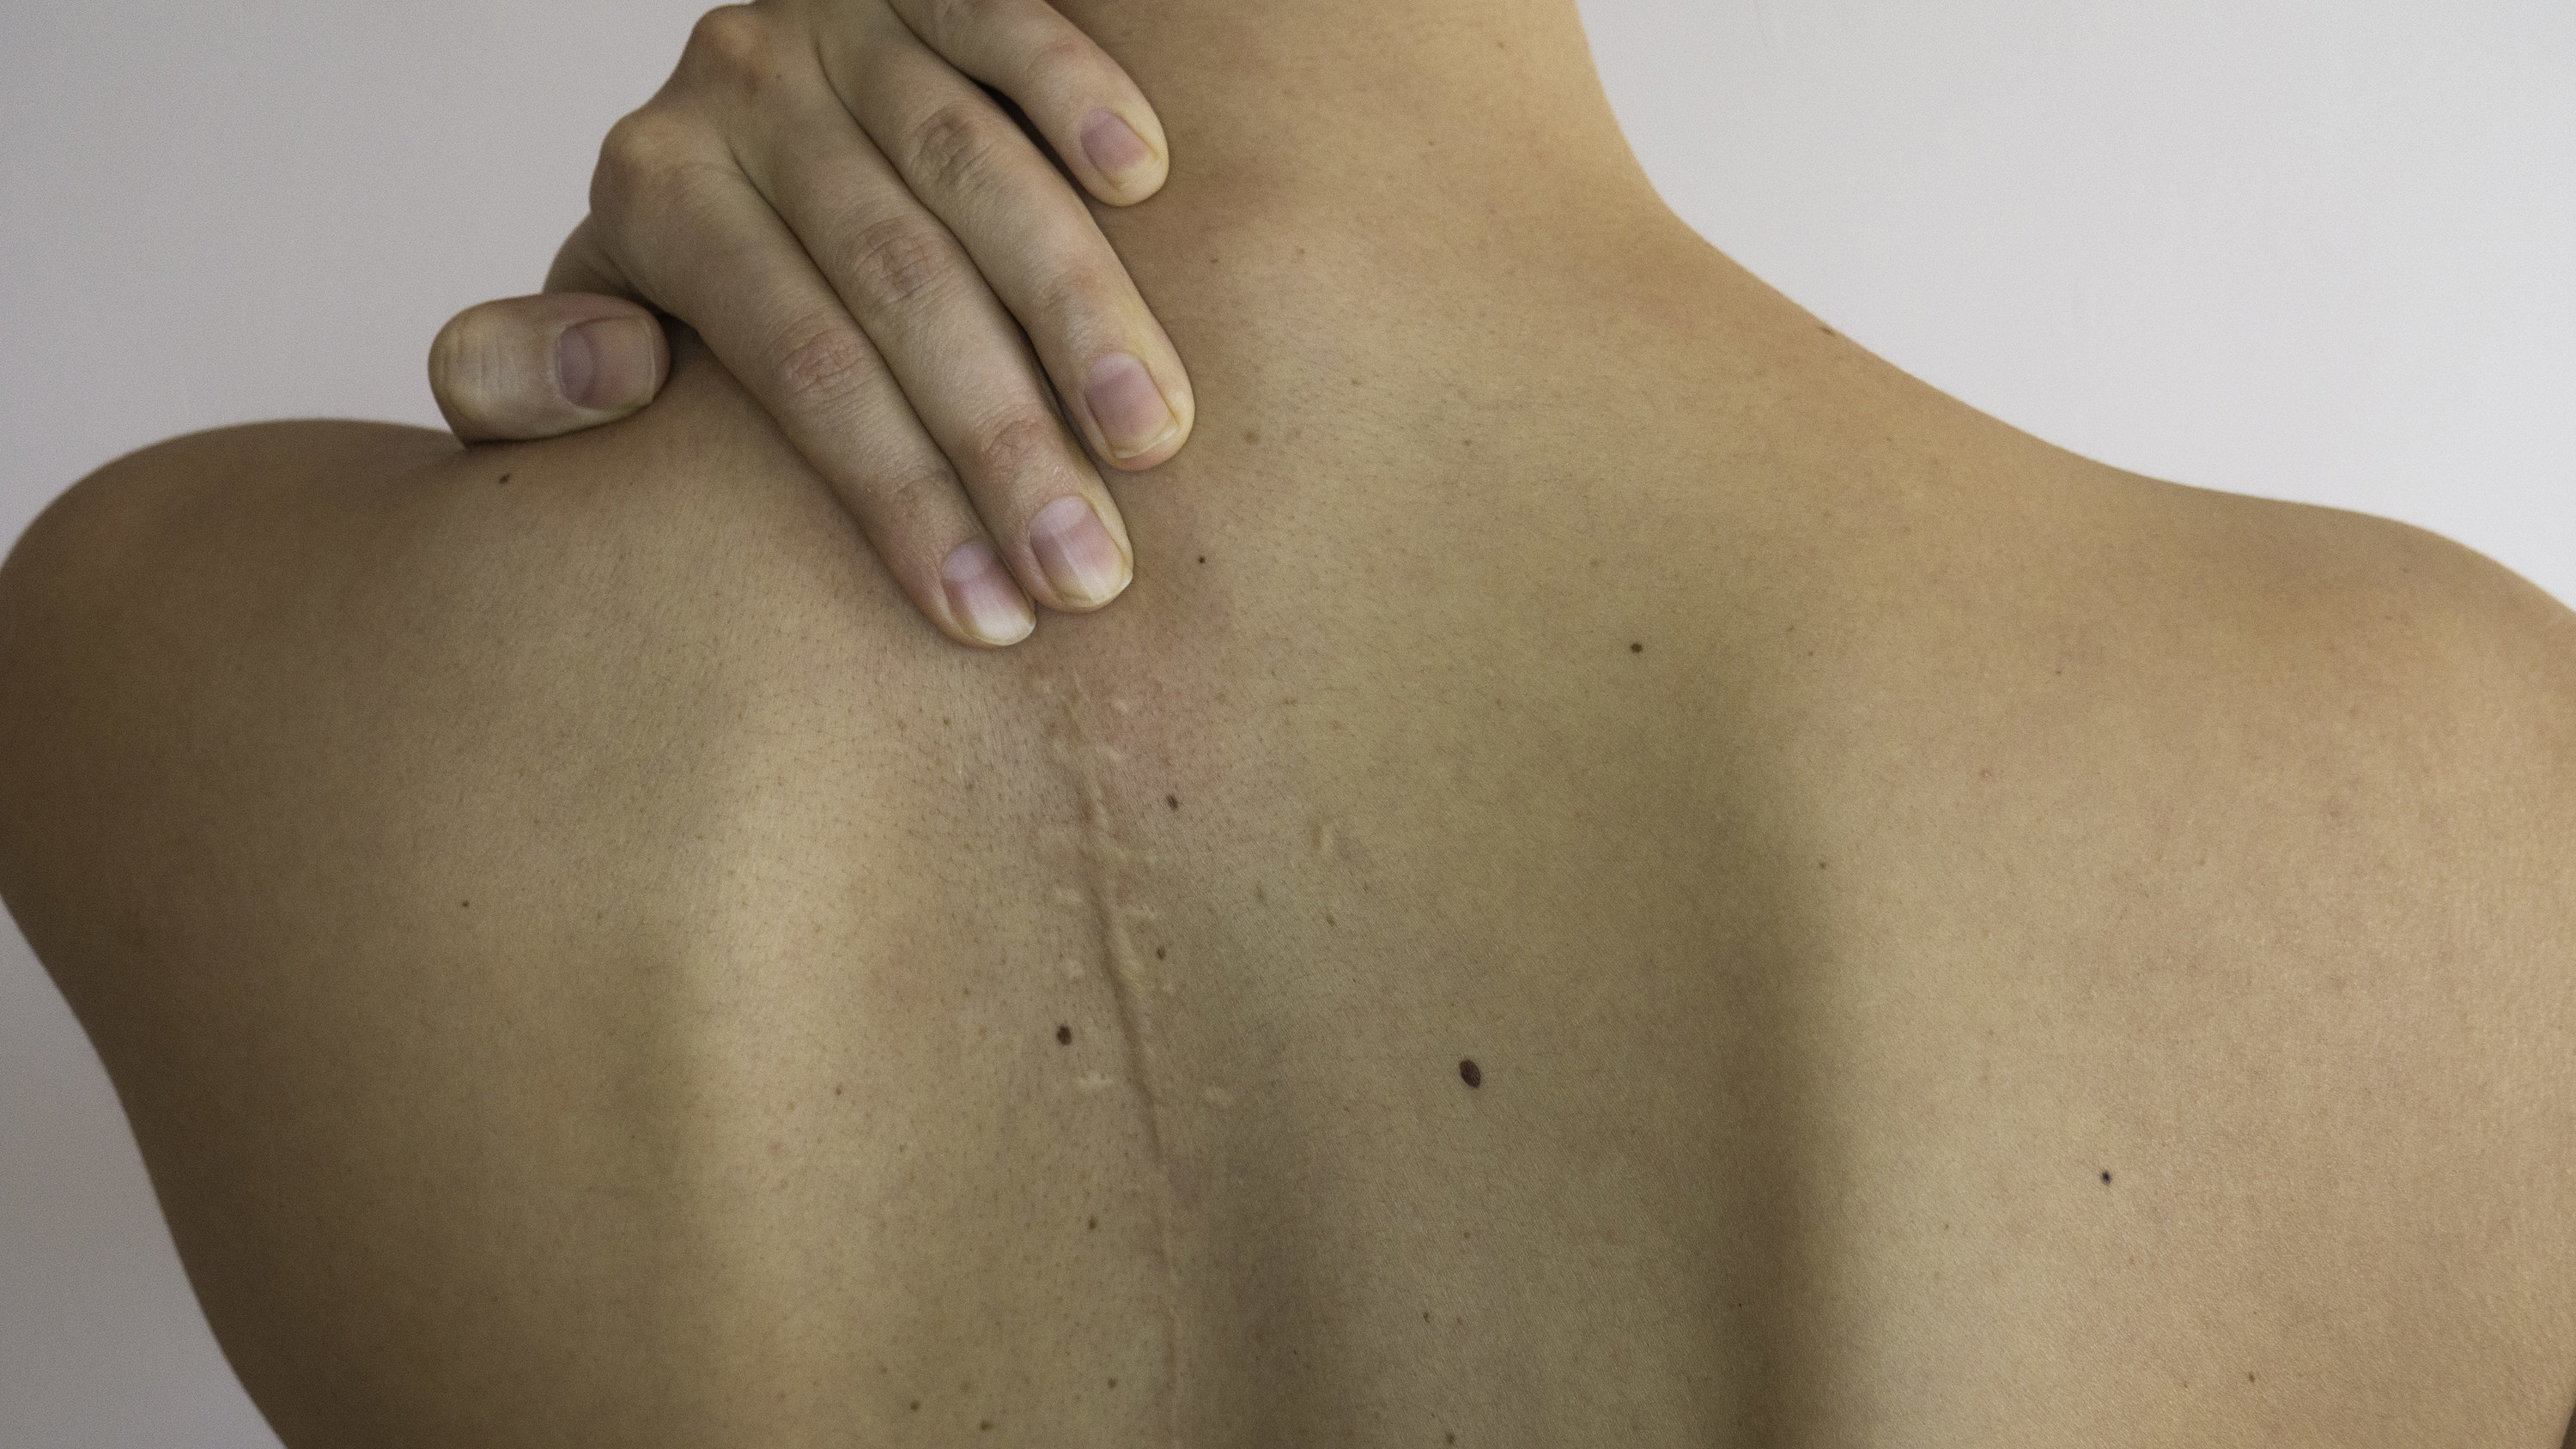 a scar on a woman&#x27;s back